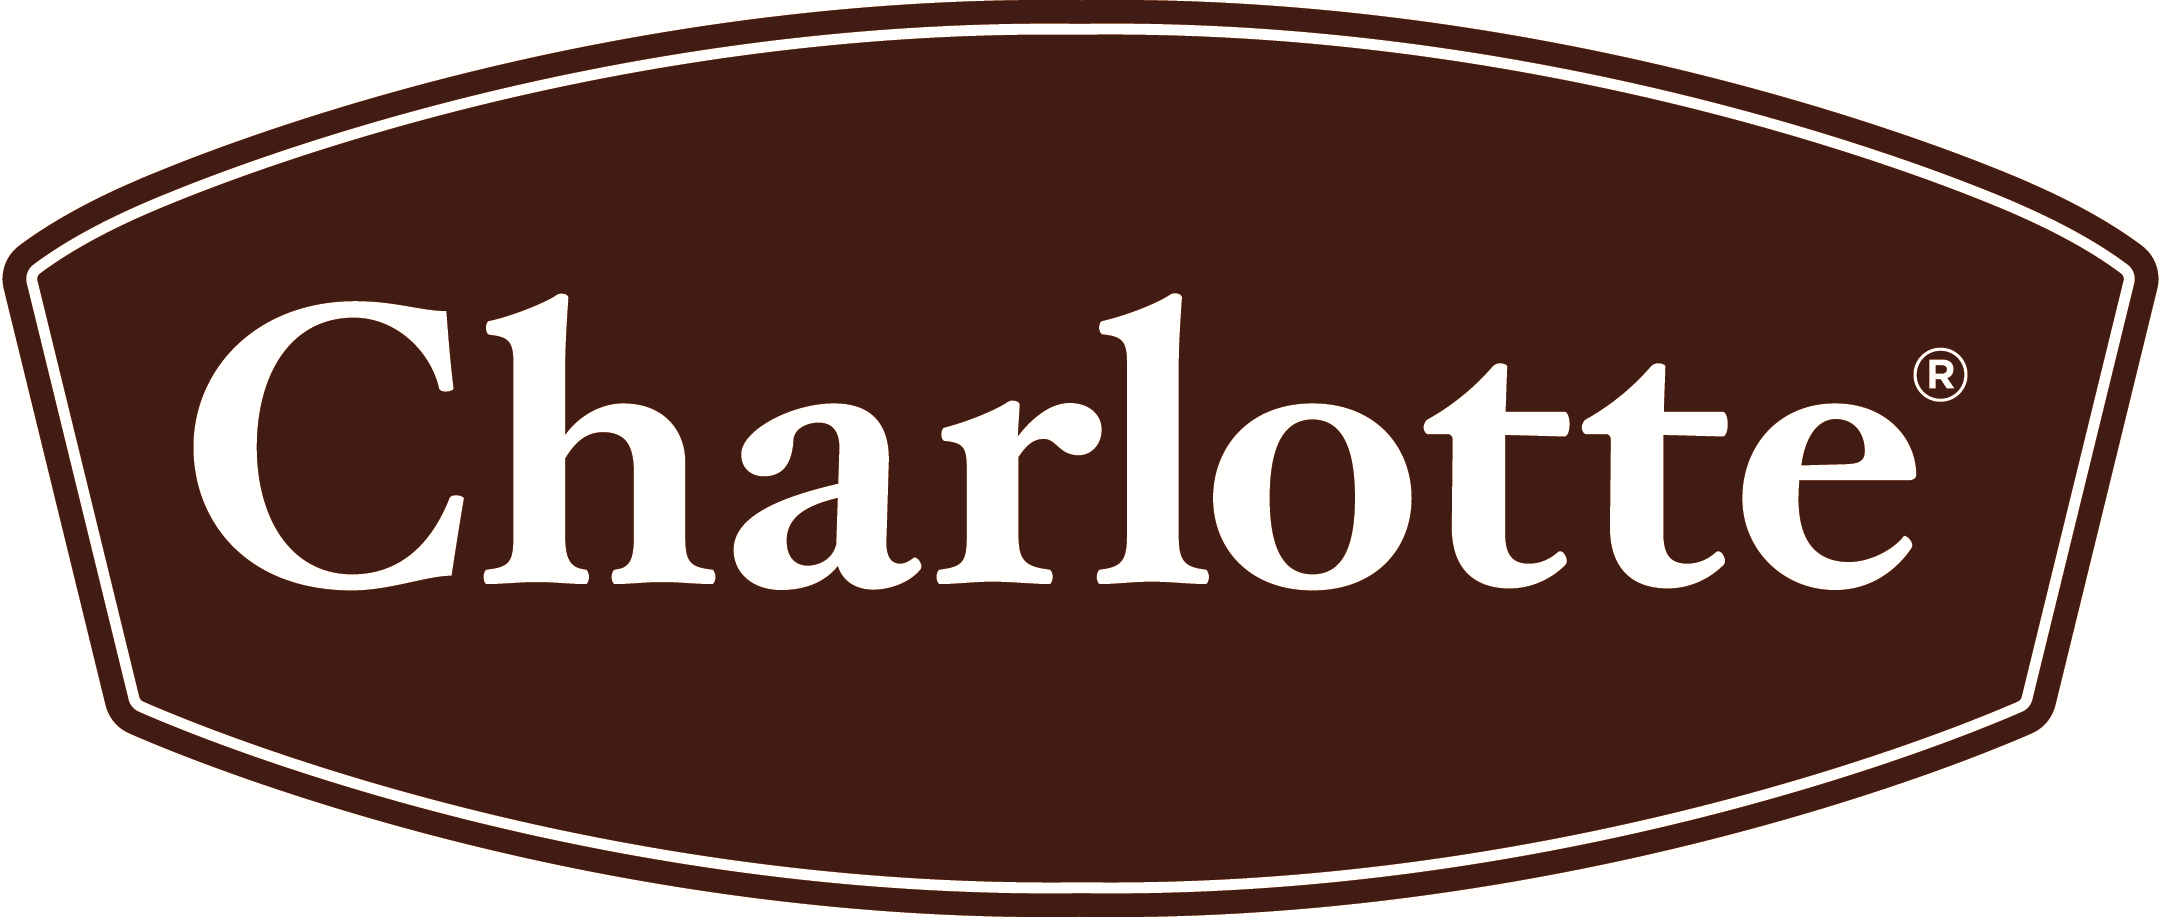 Logomarca Charlotte